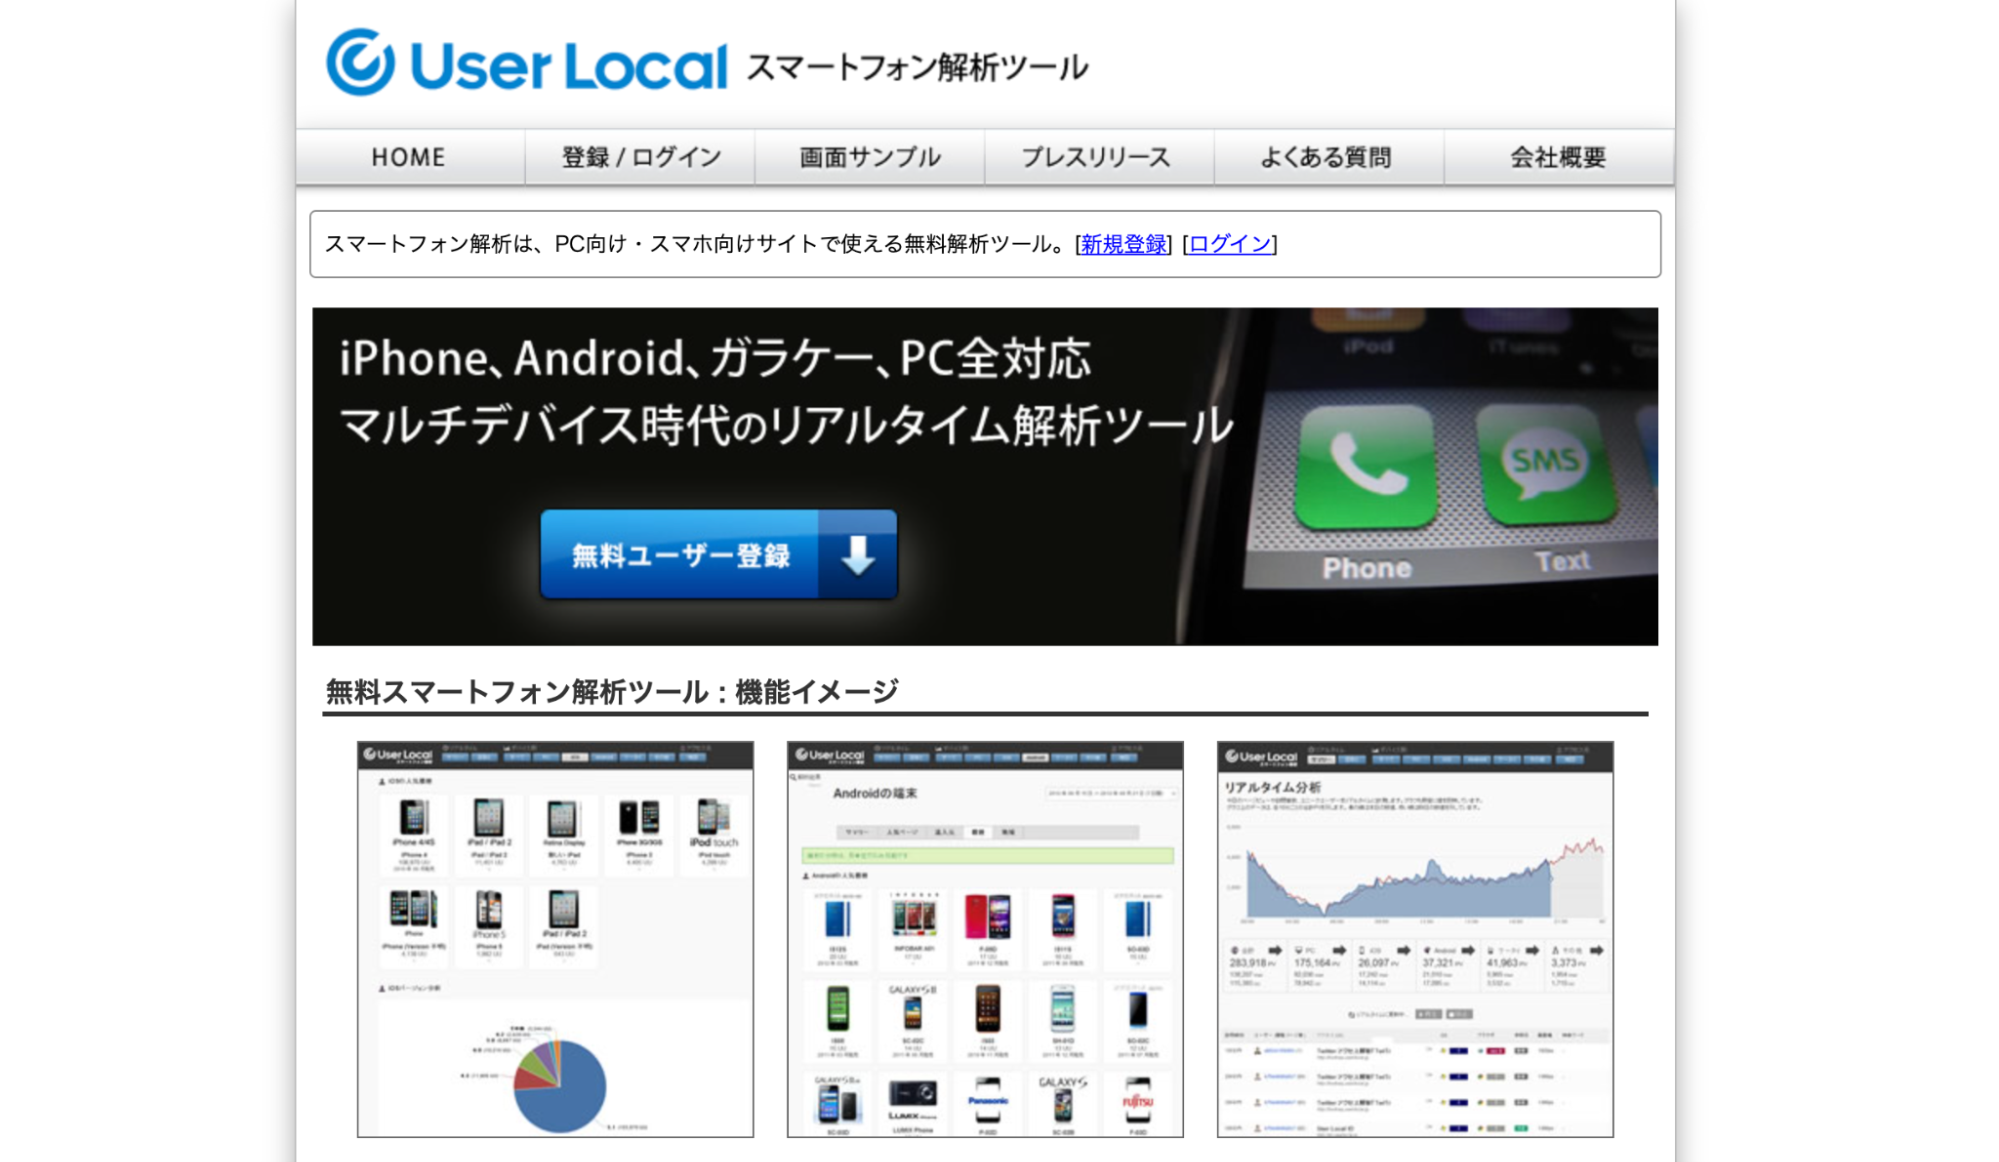 User Local  スマートフォン解析ツール